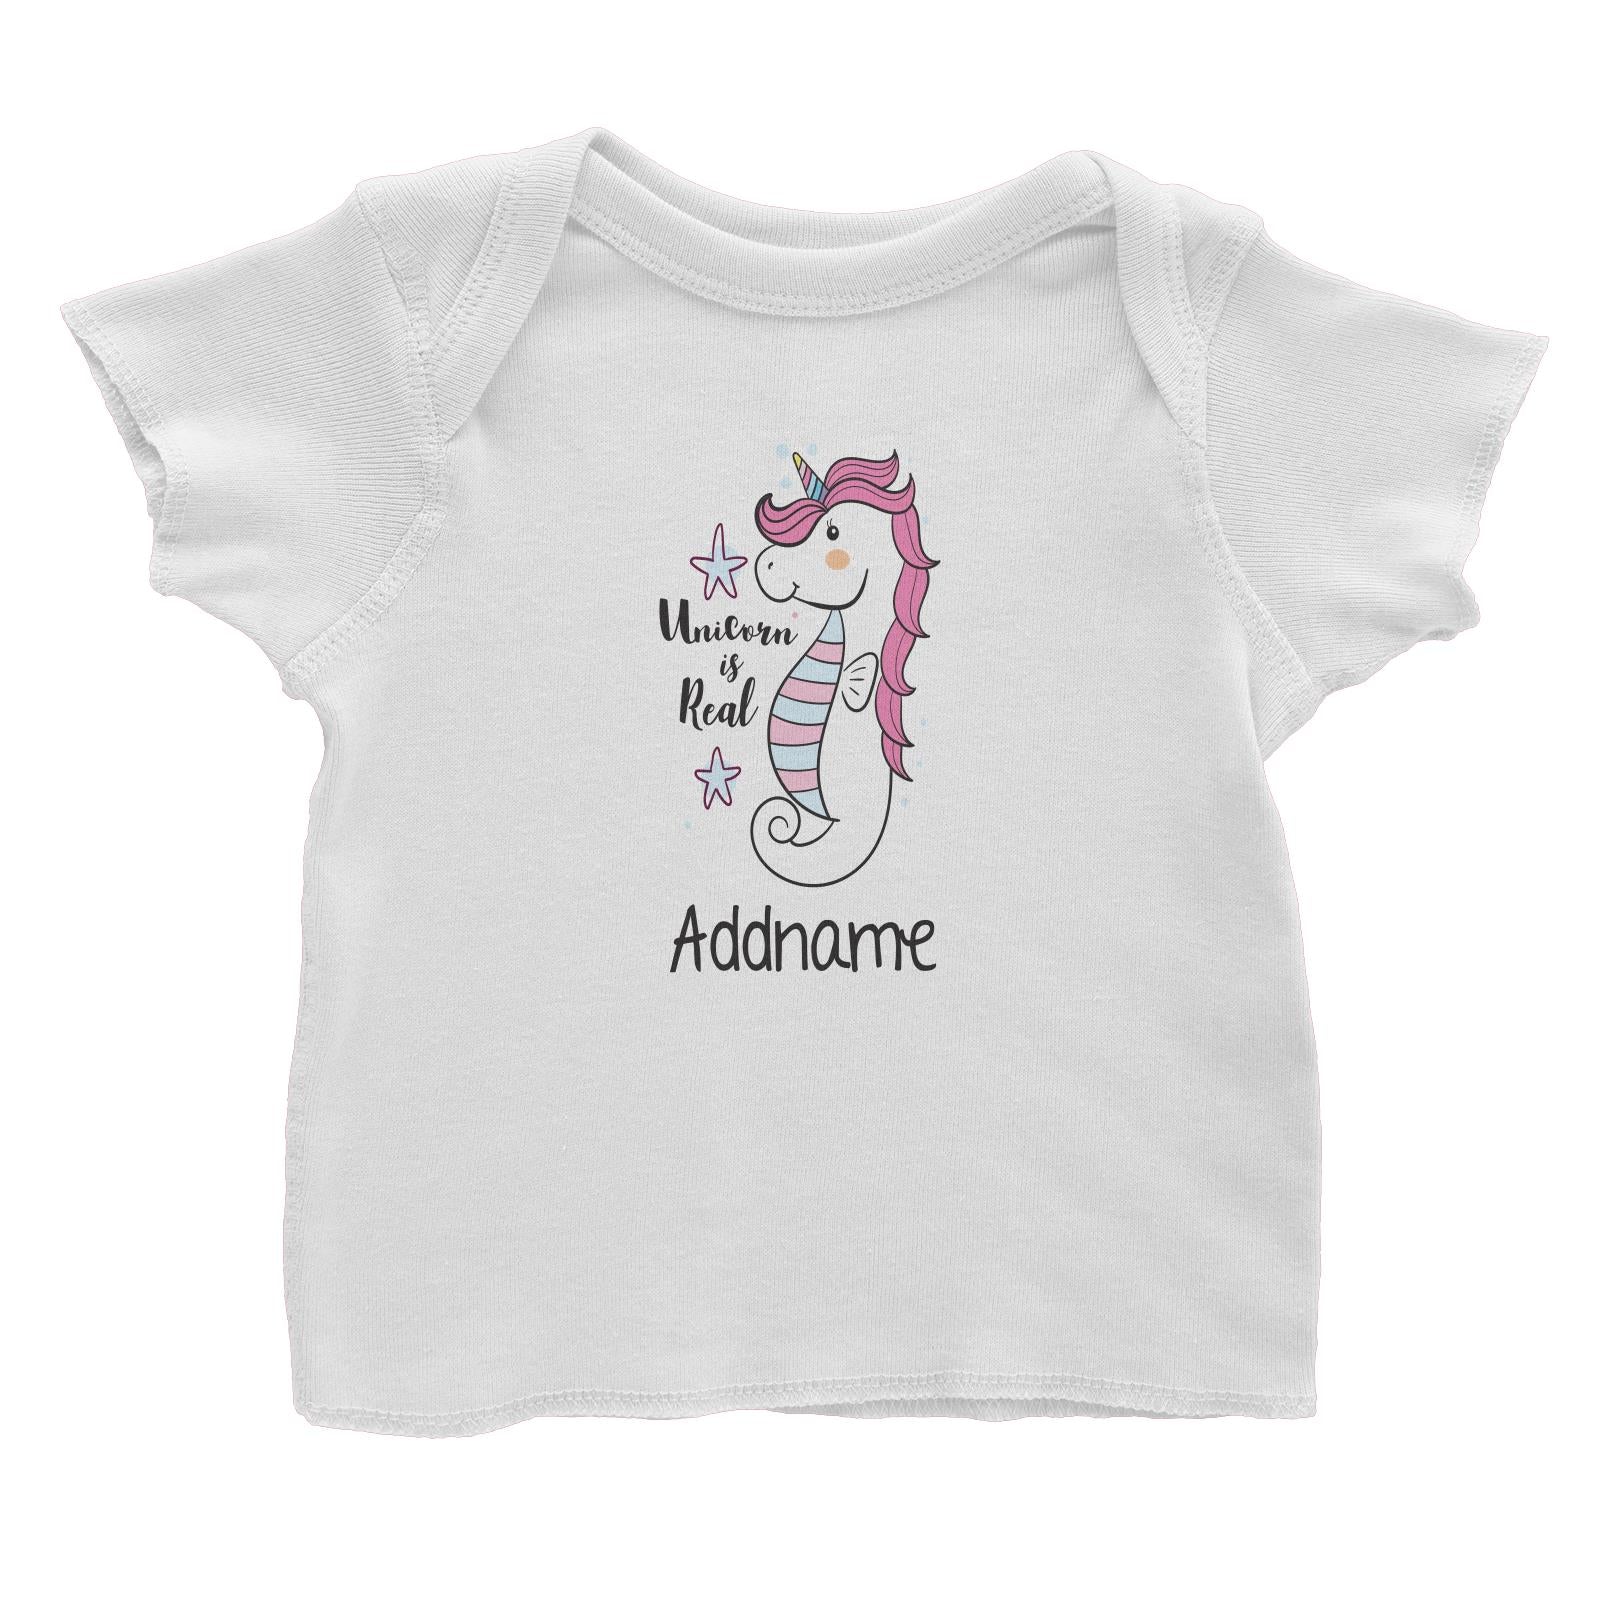 Cool Cute Unicorn Unicorn Is Real Unicorn Seahorse Addname Baby T-Shirt